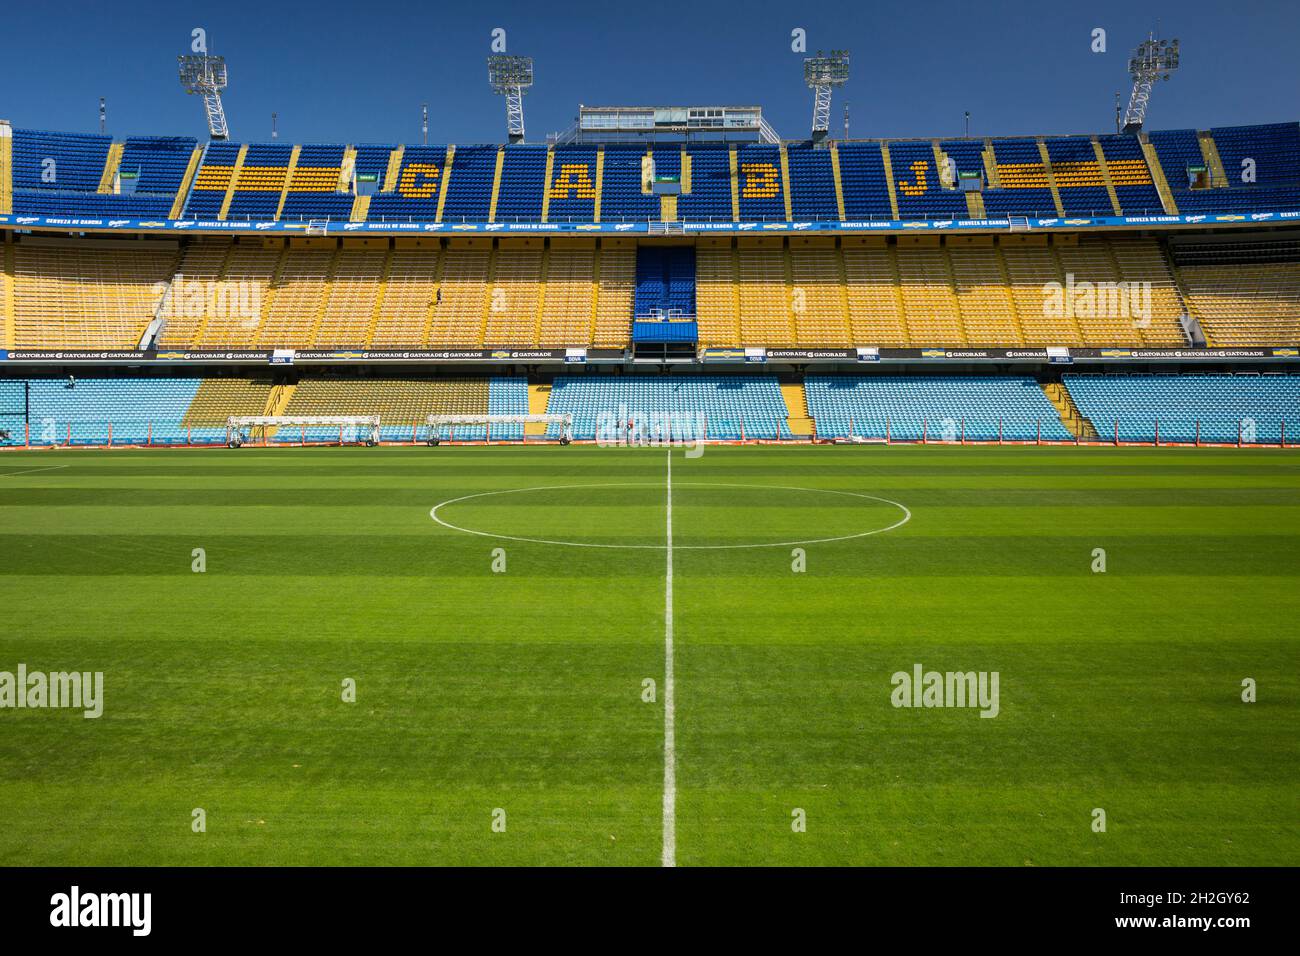 Horizontal frontal view of La Bombonera field (Boca Juniors soccer field) and stands, La Boca neighborhood, Buenos Aires, Argentina Stock Photo